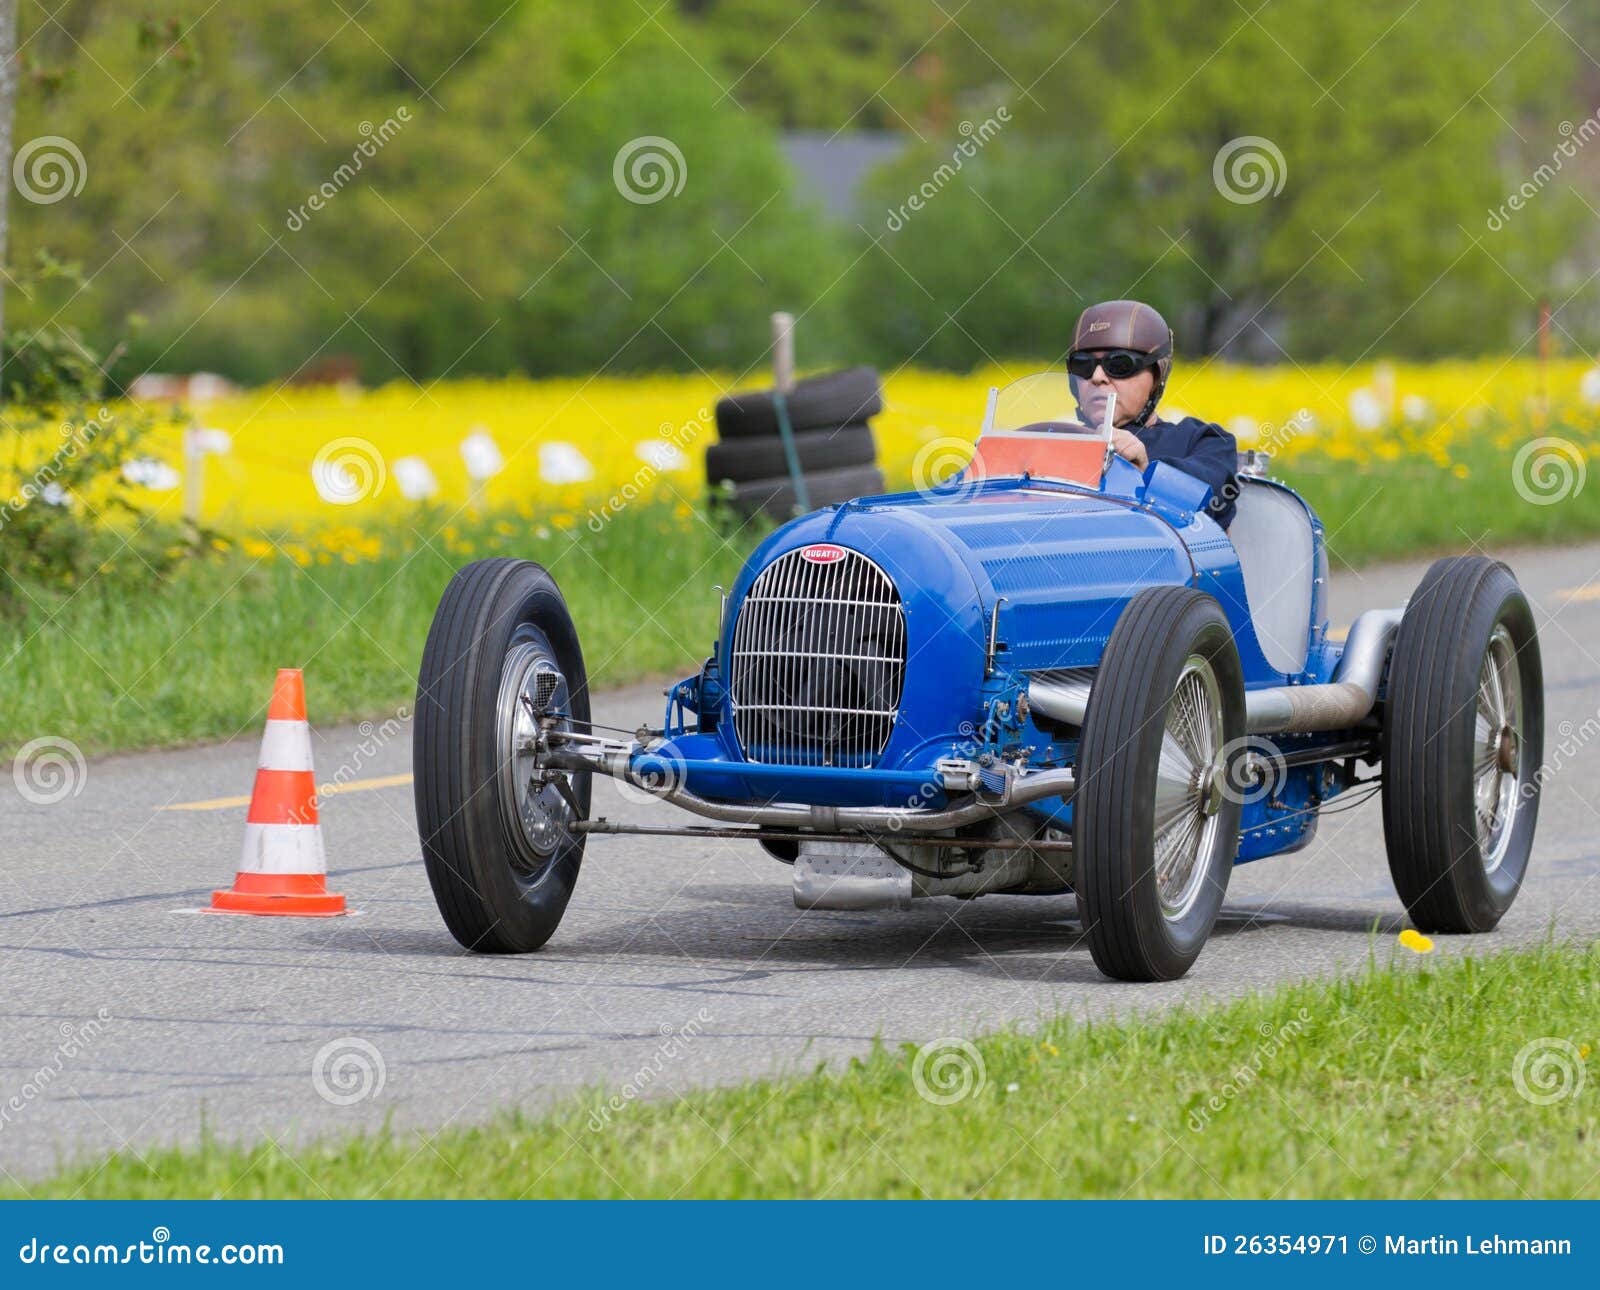 Bugatti Type 35 Vintage Race Car Stock Photo - Download Image Now